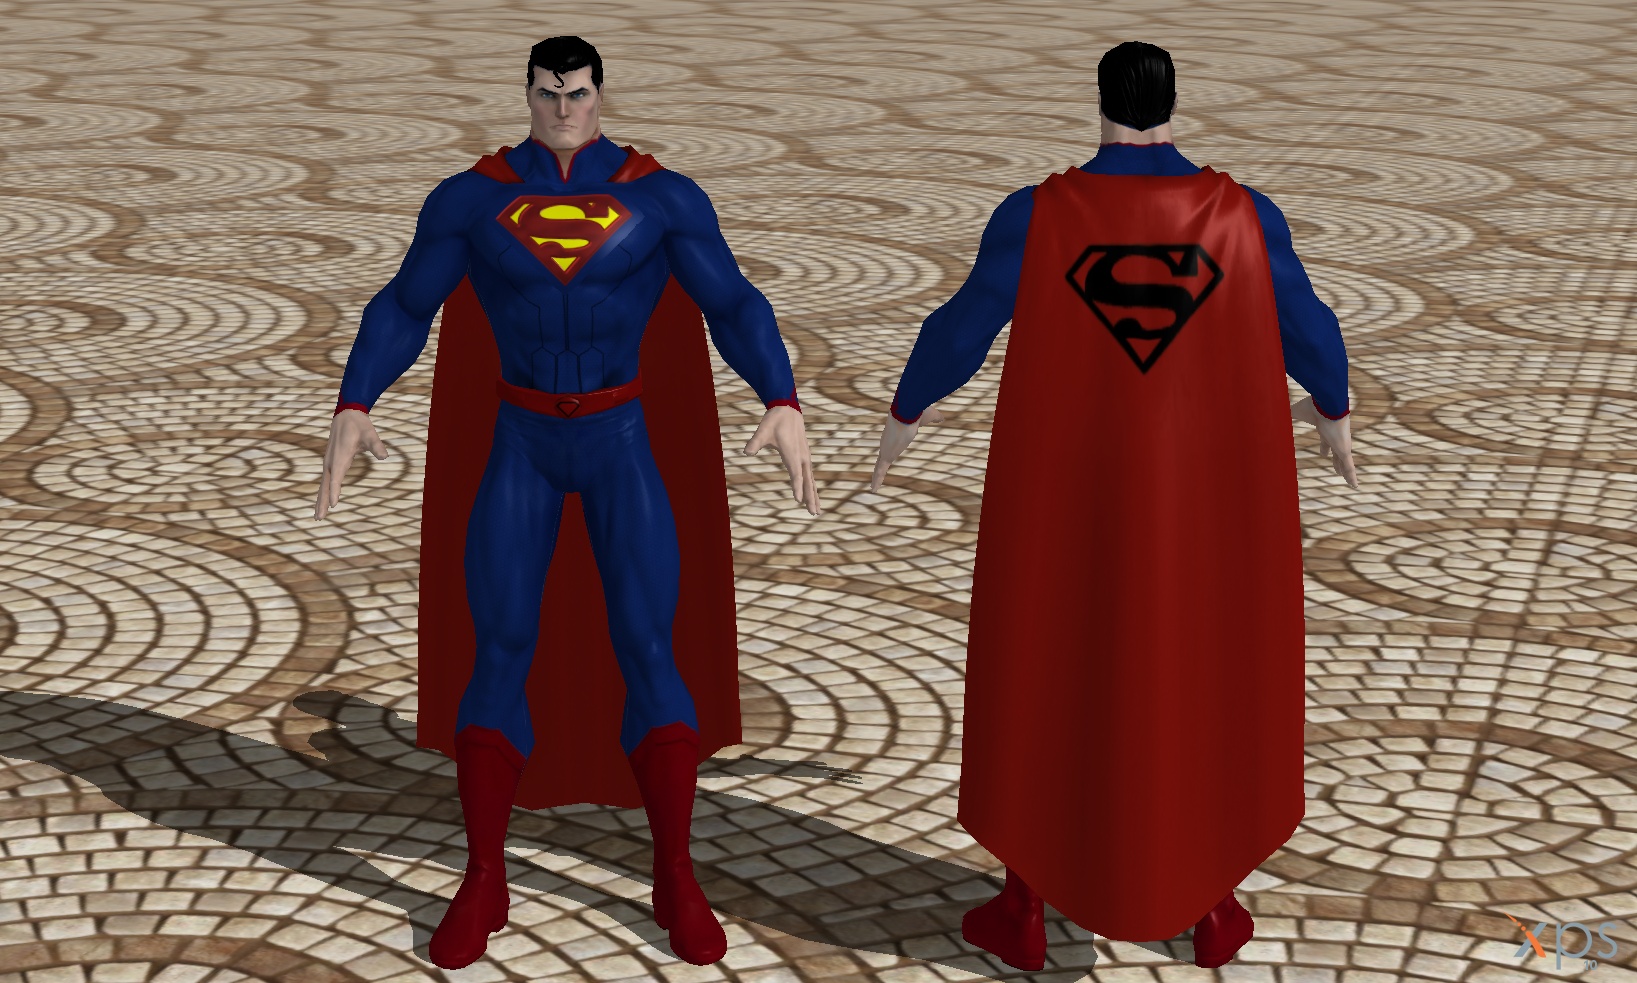 MAN OF STEEL 2 CANCEL ❌ . . . . . . . . . #superman #superman2 #dccomics  #dc #manofsteel2 #wonderwoman #dcuniverse #comics #marvel…